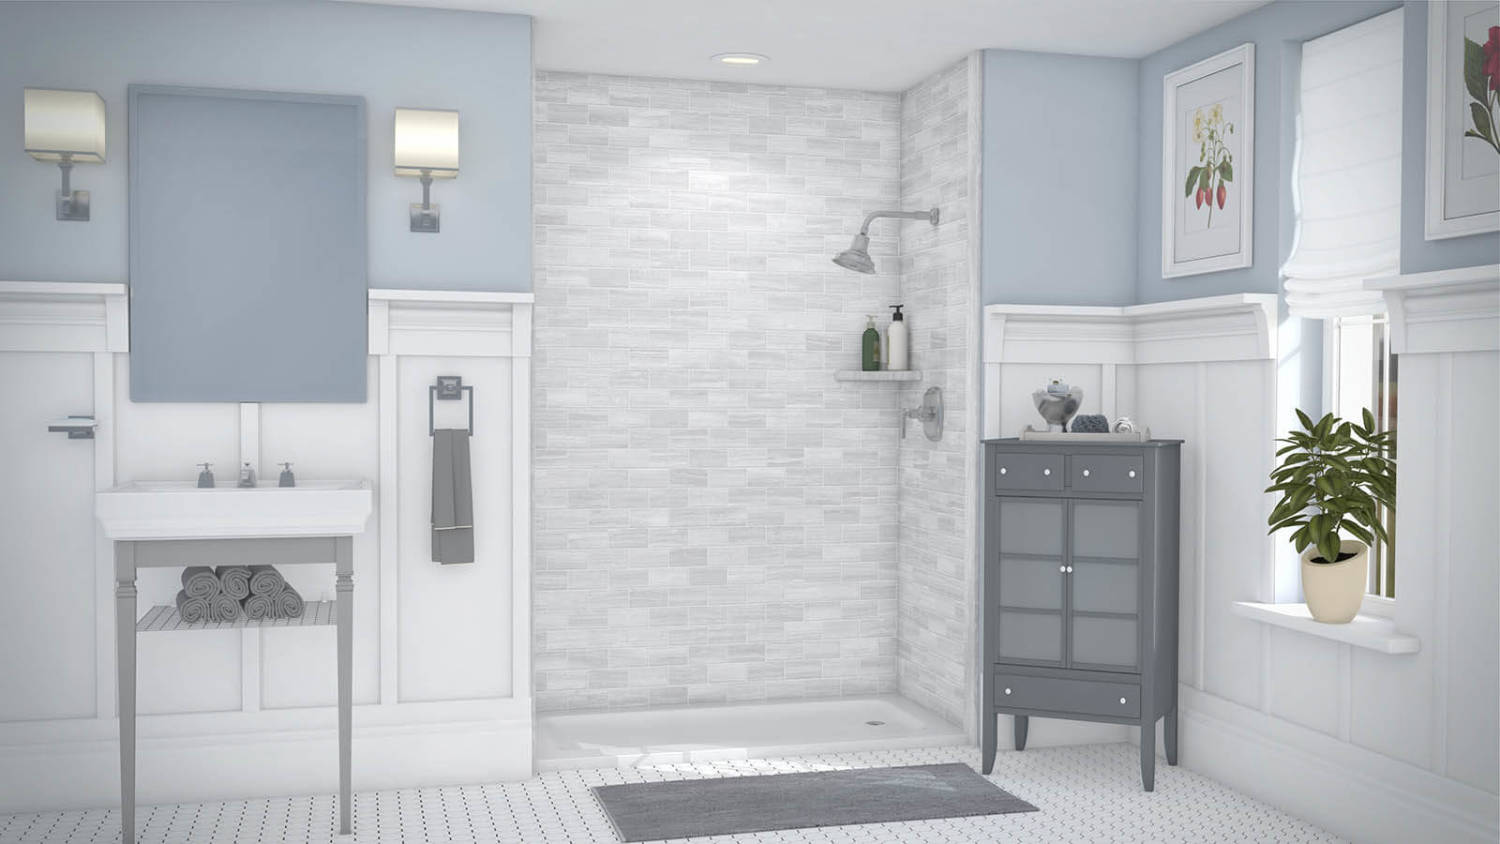 Waterproof Floor Standing PVC Side Cabinet For Bathroom, Shower